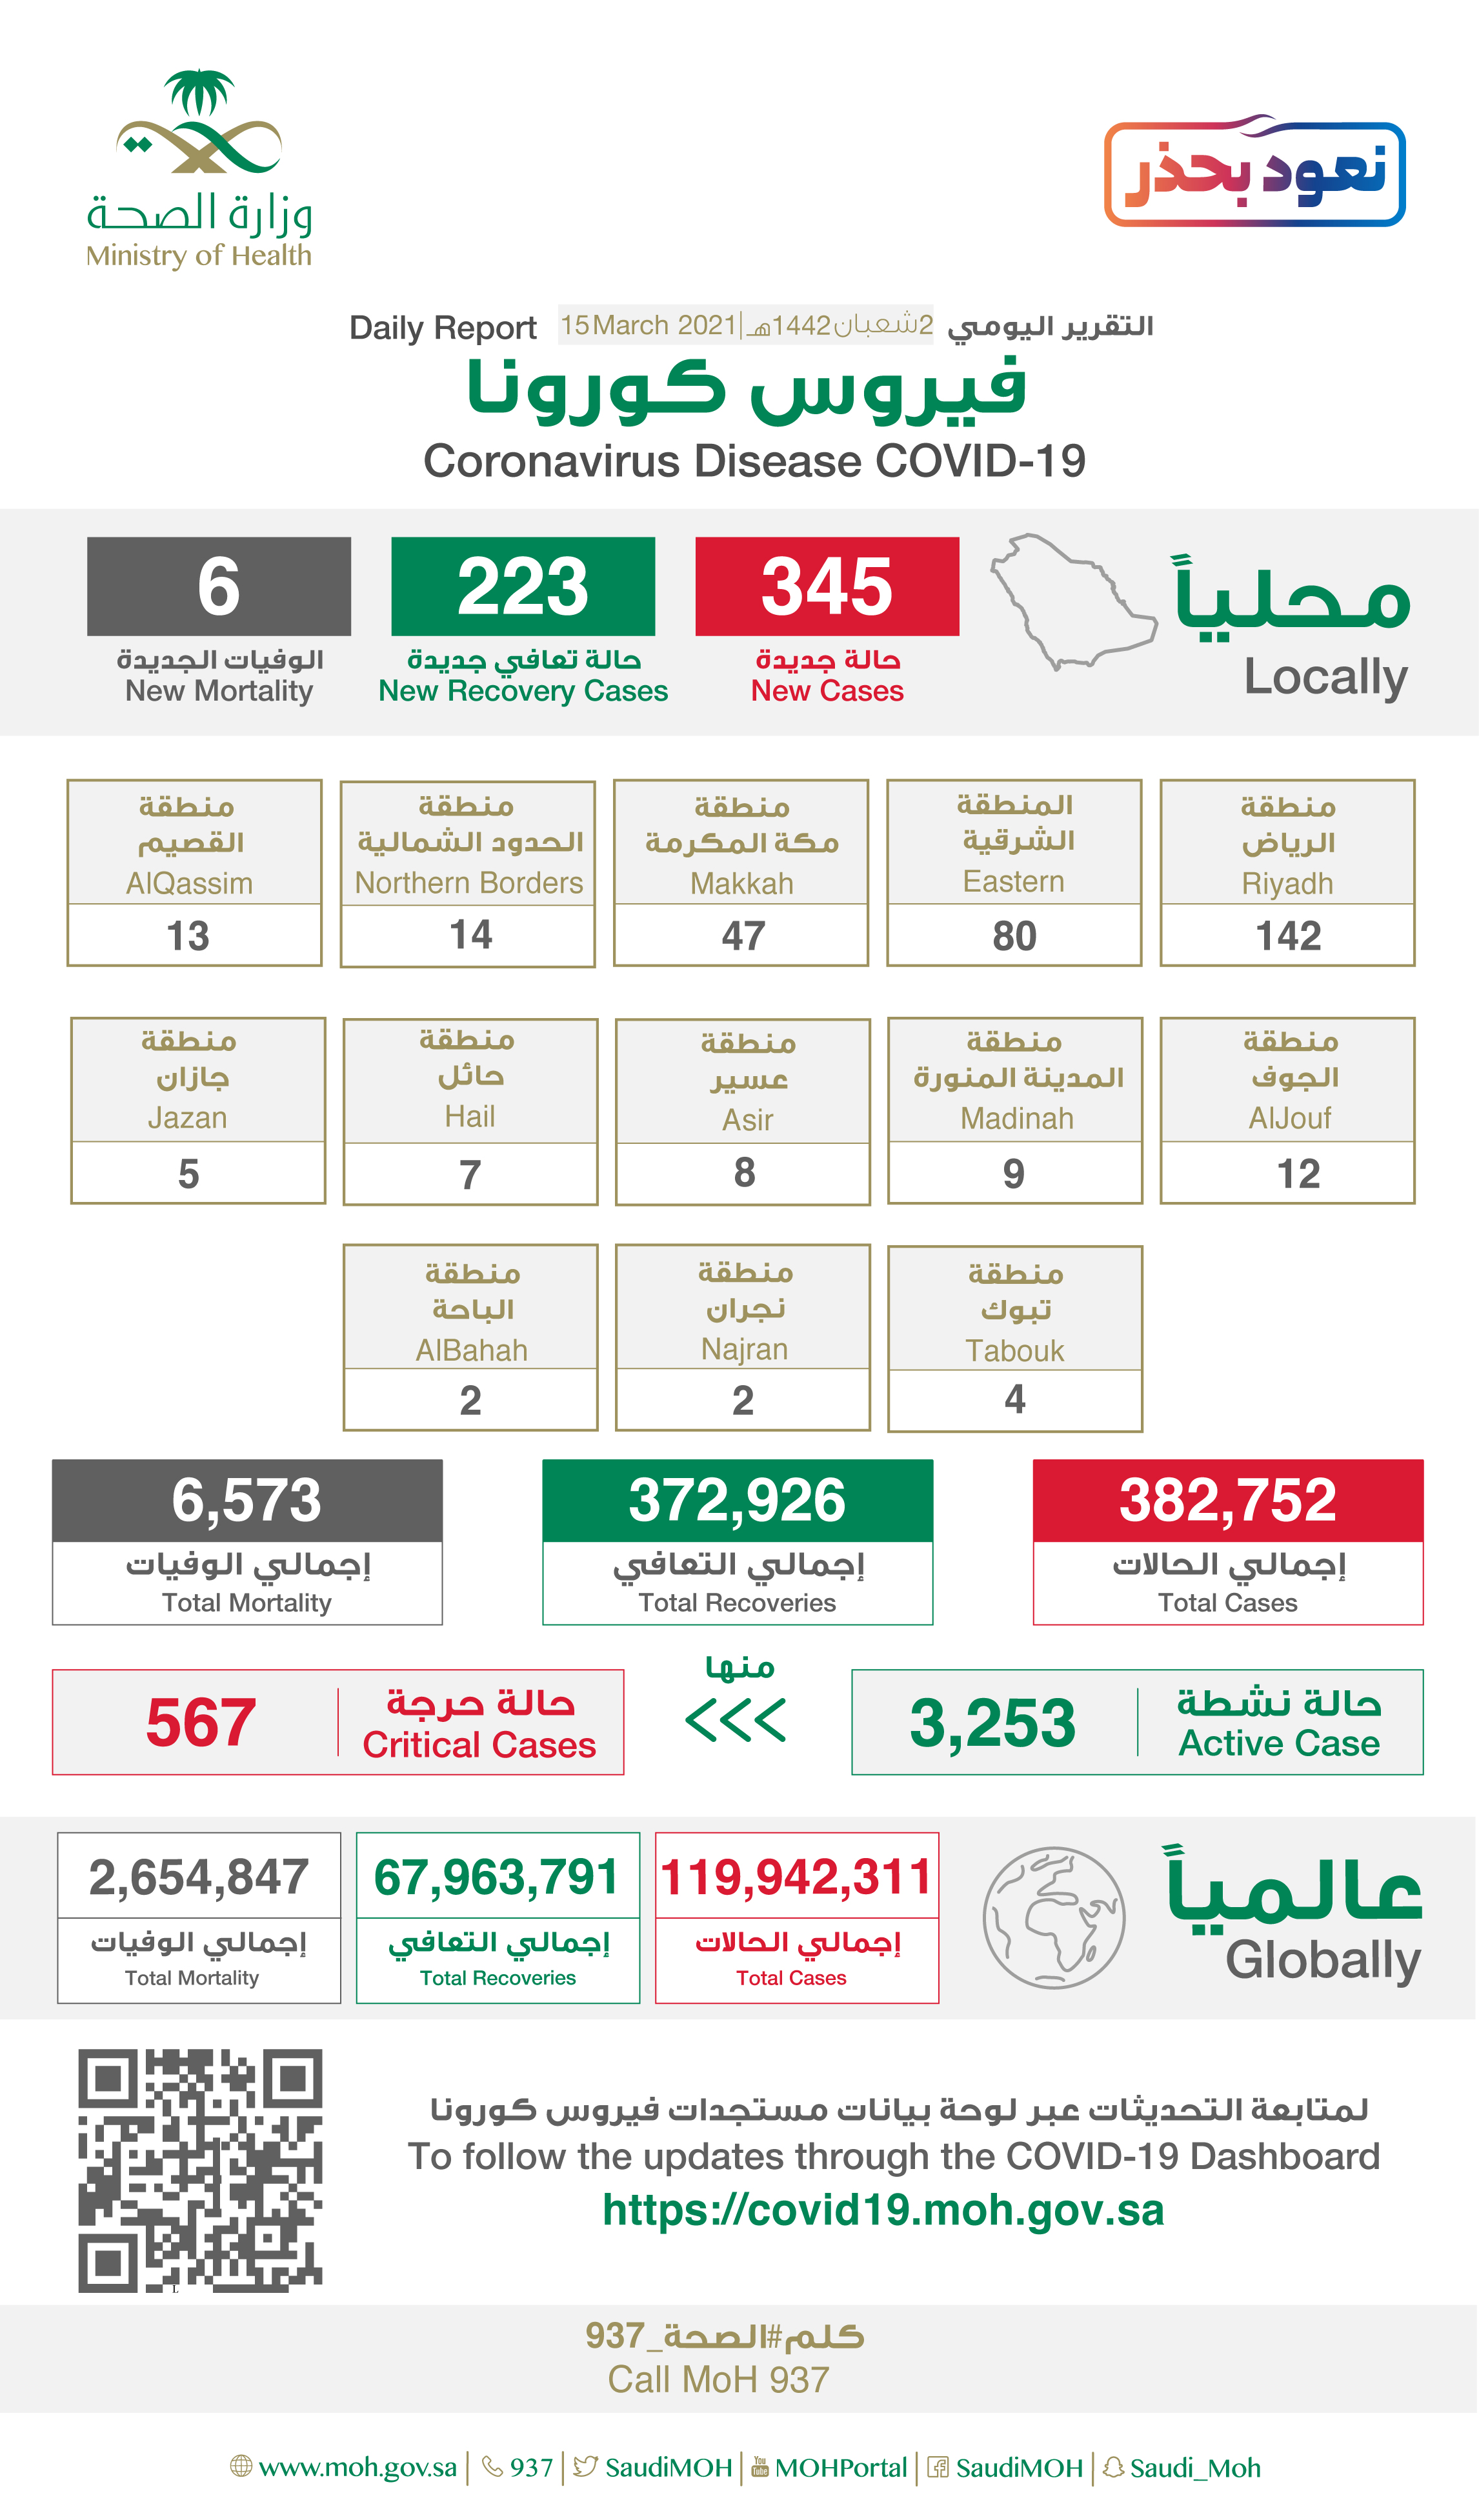 Saudi Arabia Coronavirus : Total Cases :382,752 , New Cases : 345, Cured : 372,926, Deaths: 6,573, Active Cases : 3,253